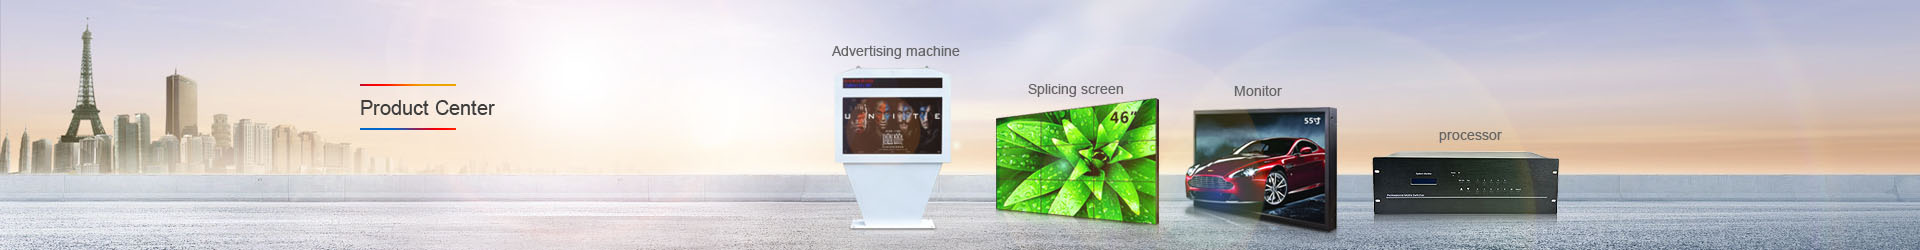 Multimedia teaching all-in-one machine